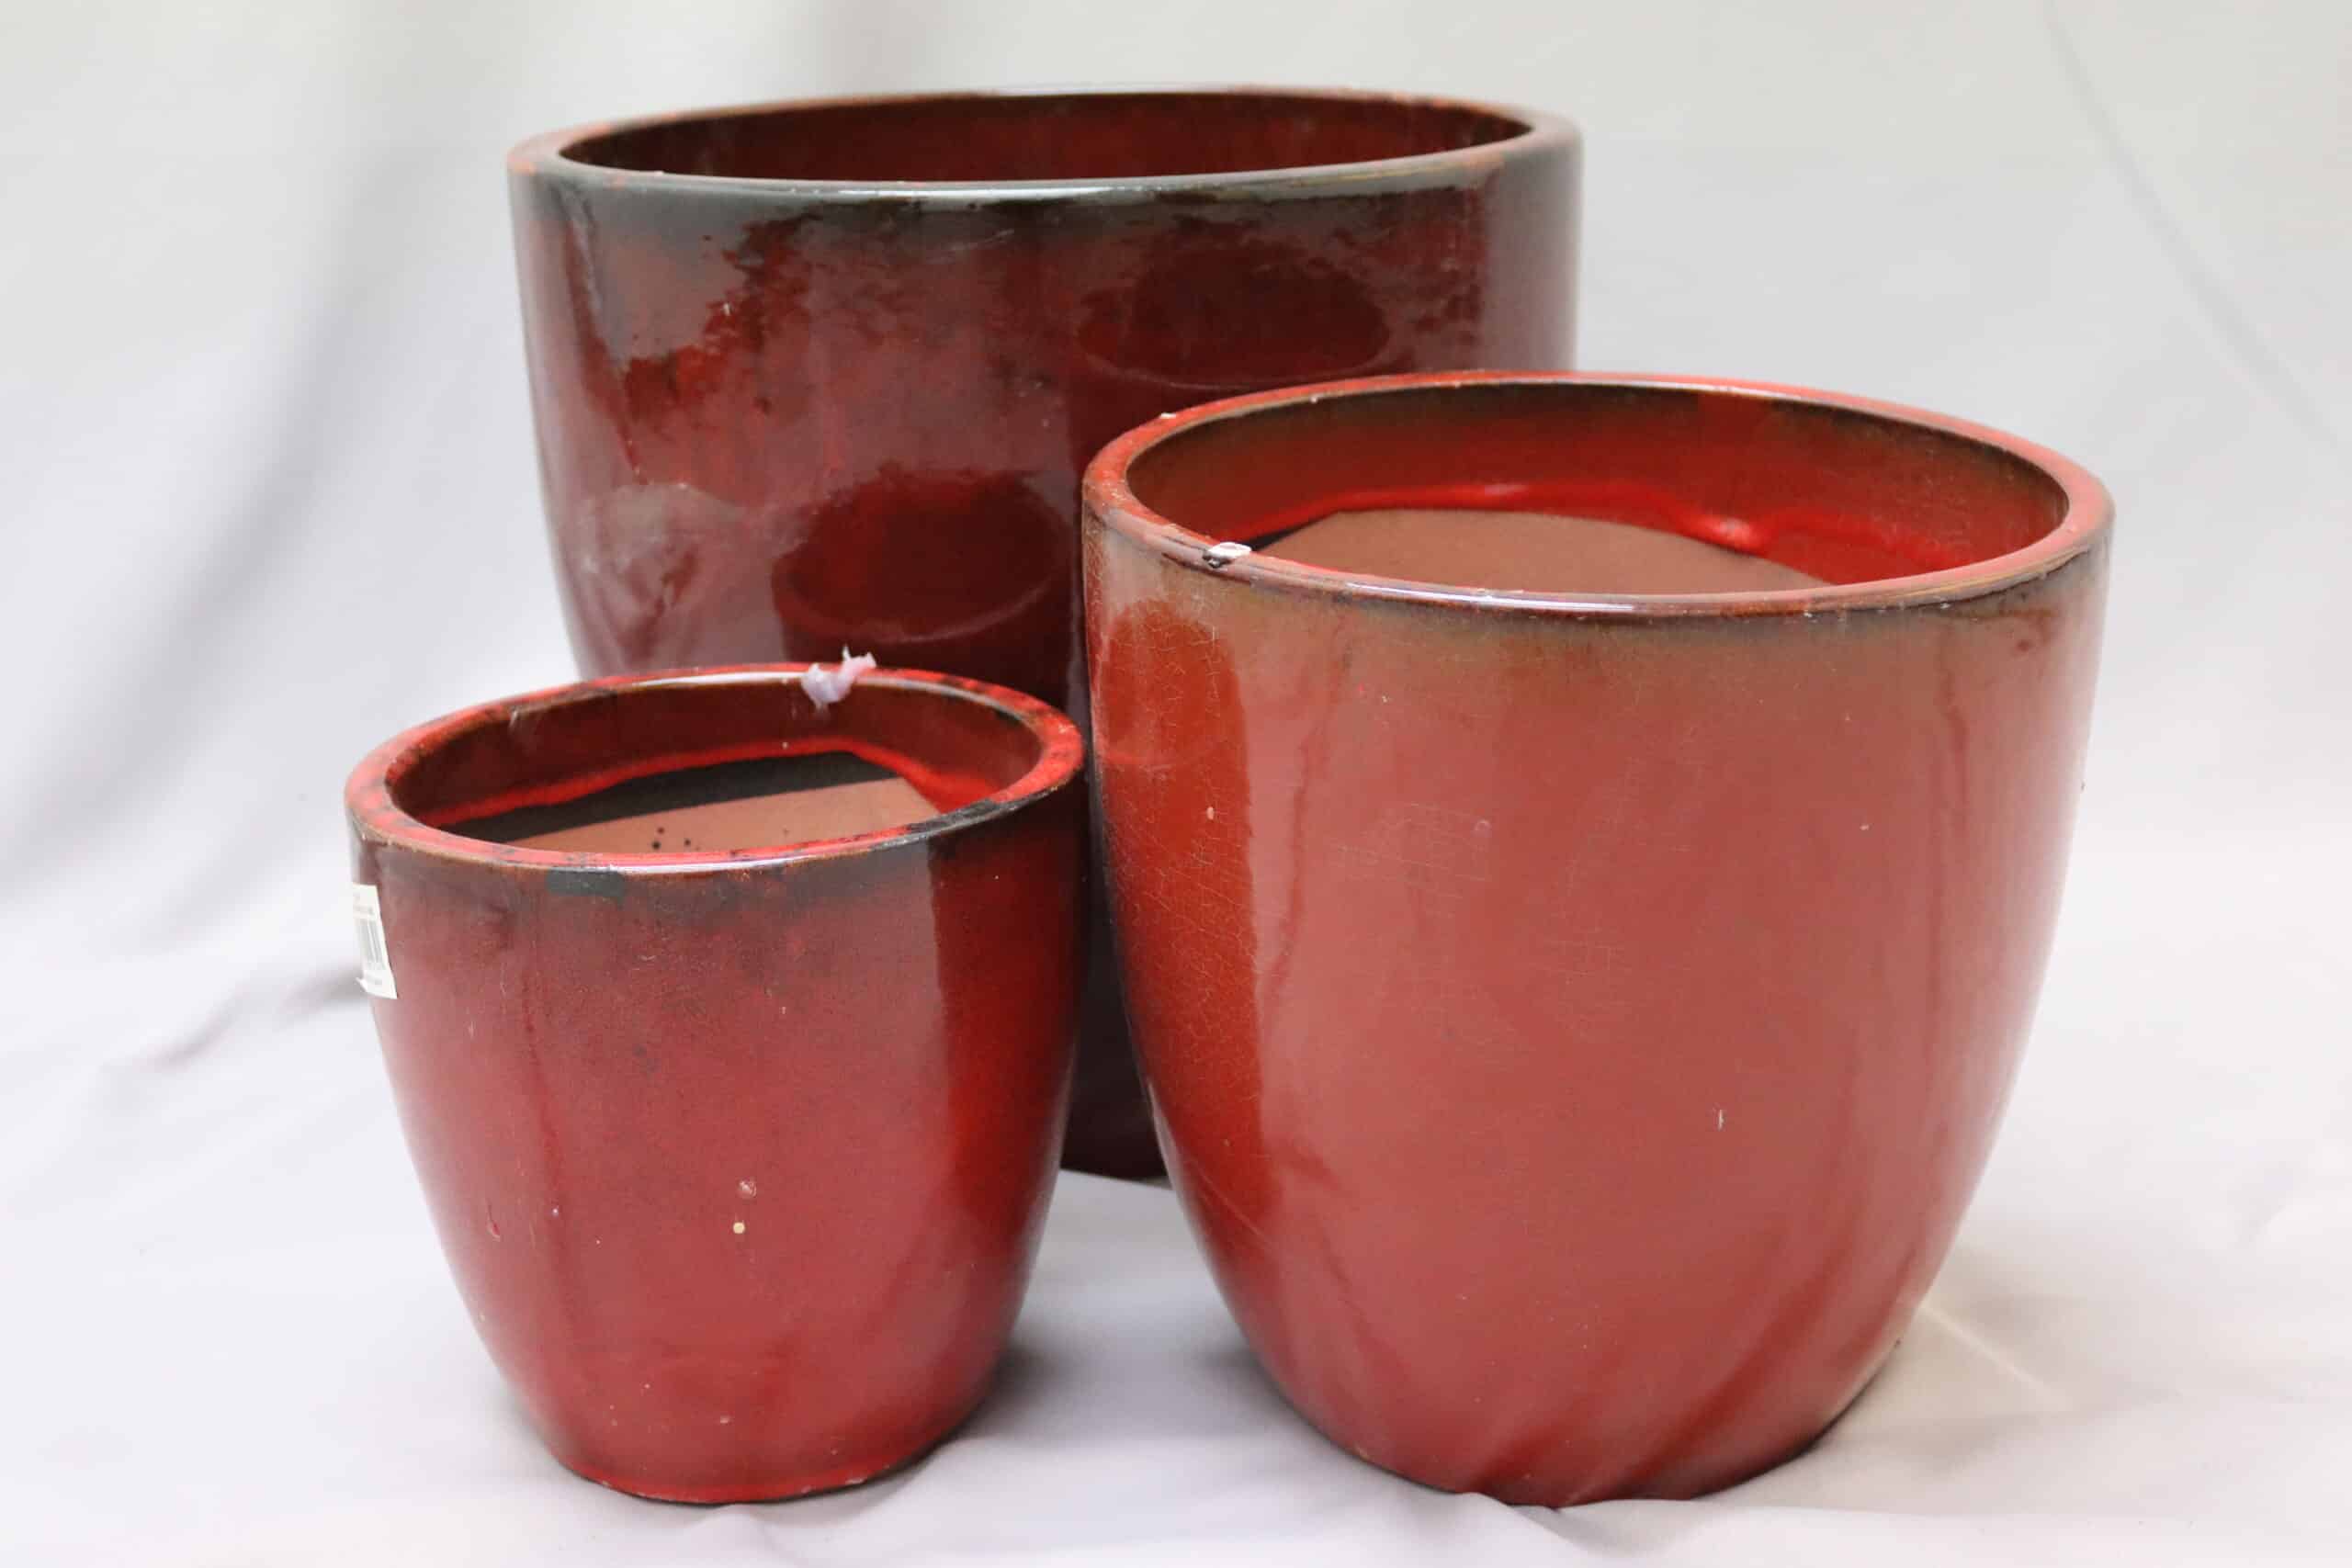 Large, medium and small glazed red egg-shaped ceramic pots.